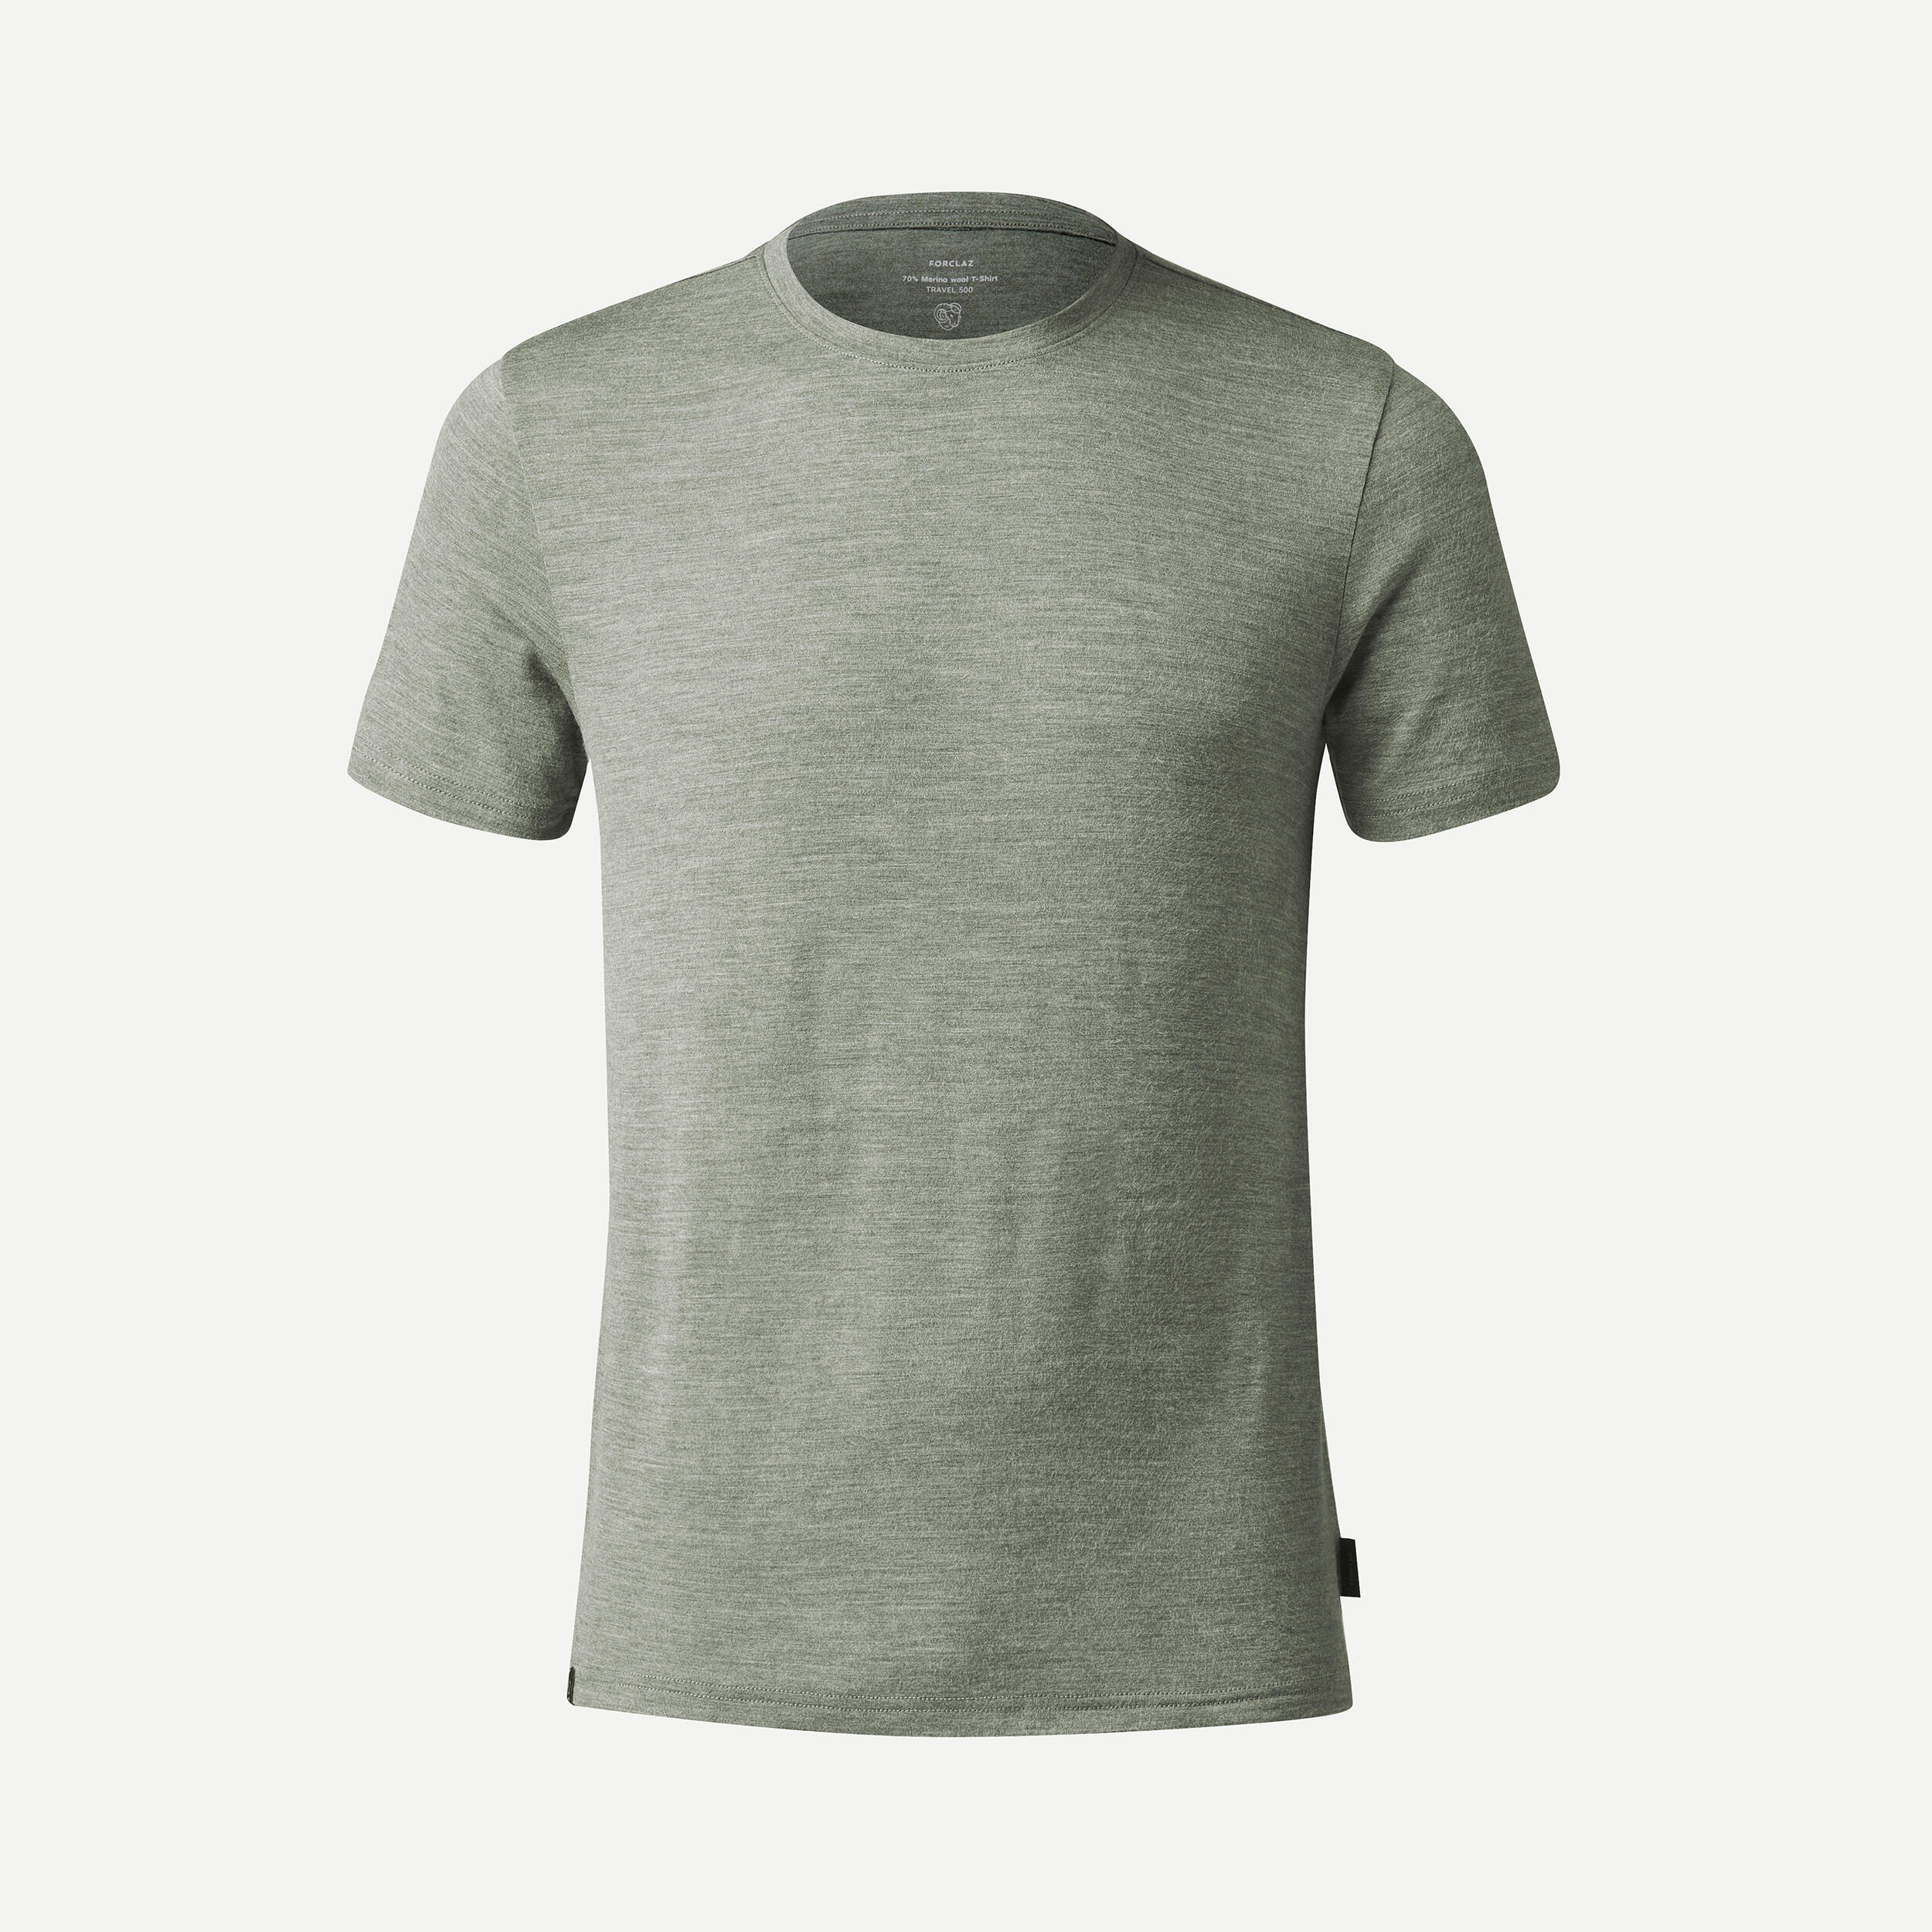 Men’s short-sleeved Merino wool hiking travel t-shirt - TRAVEL 500 khaki 5/6